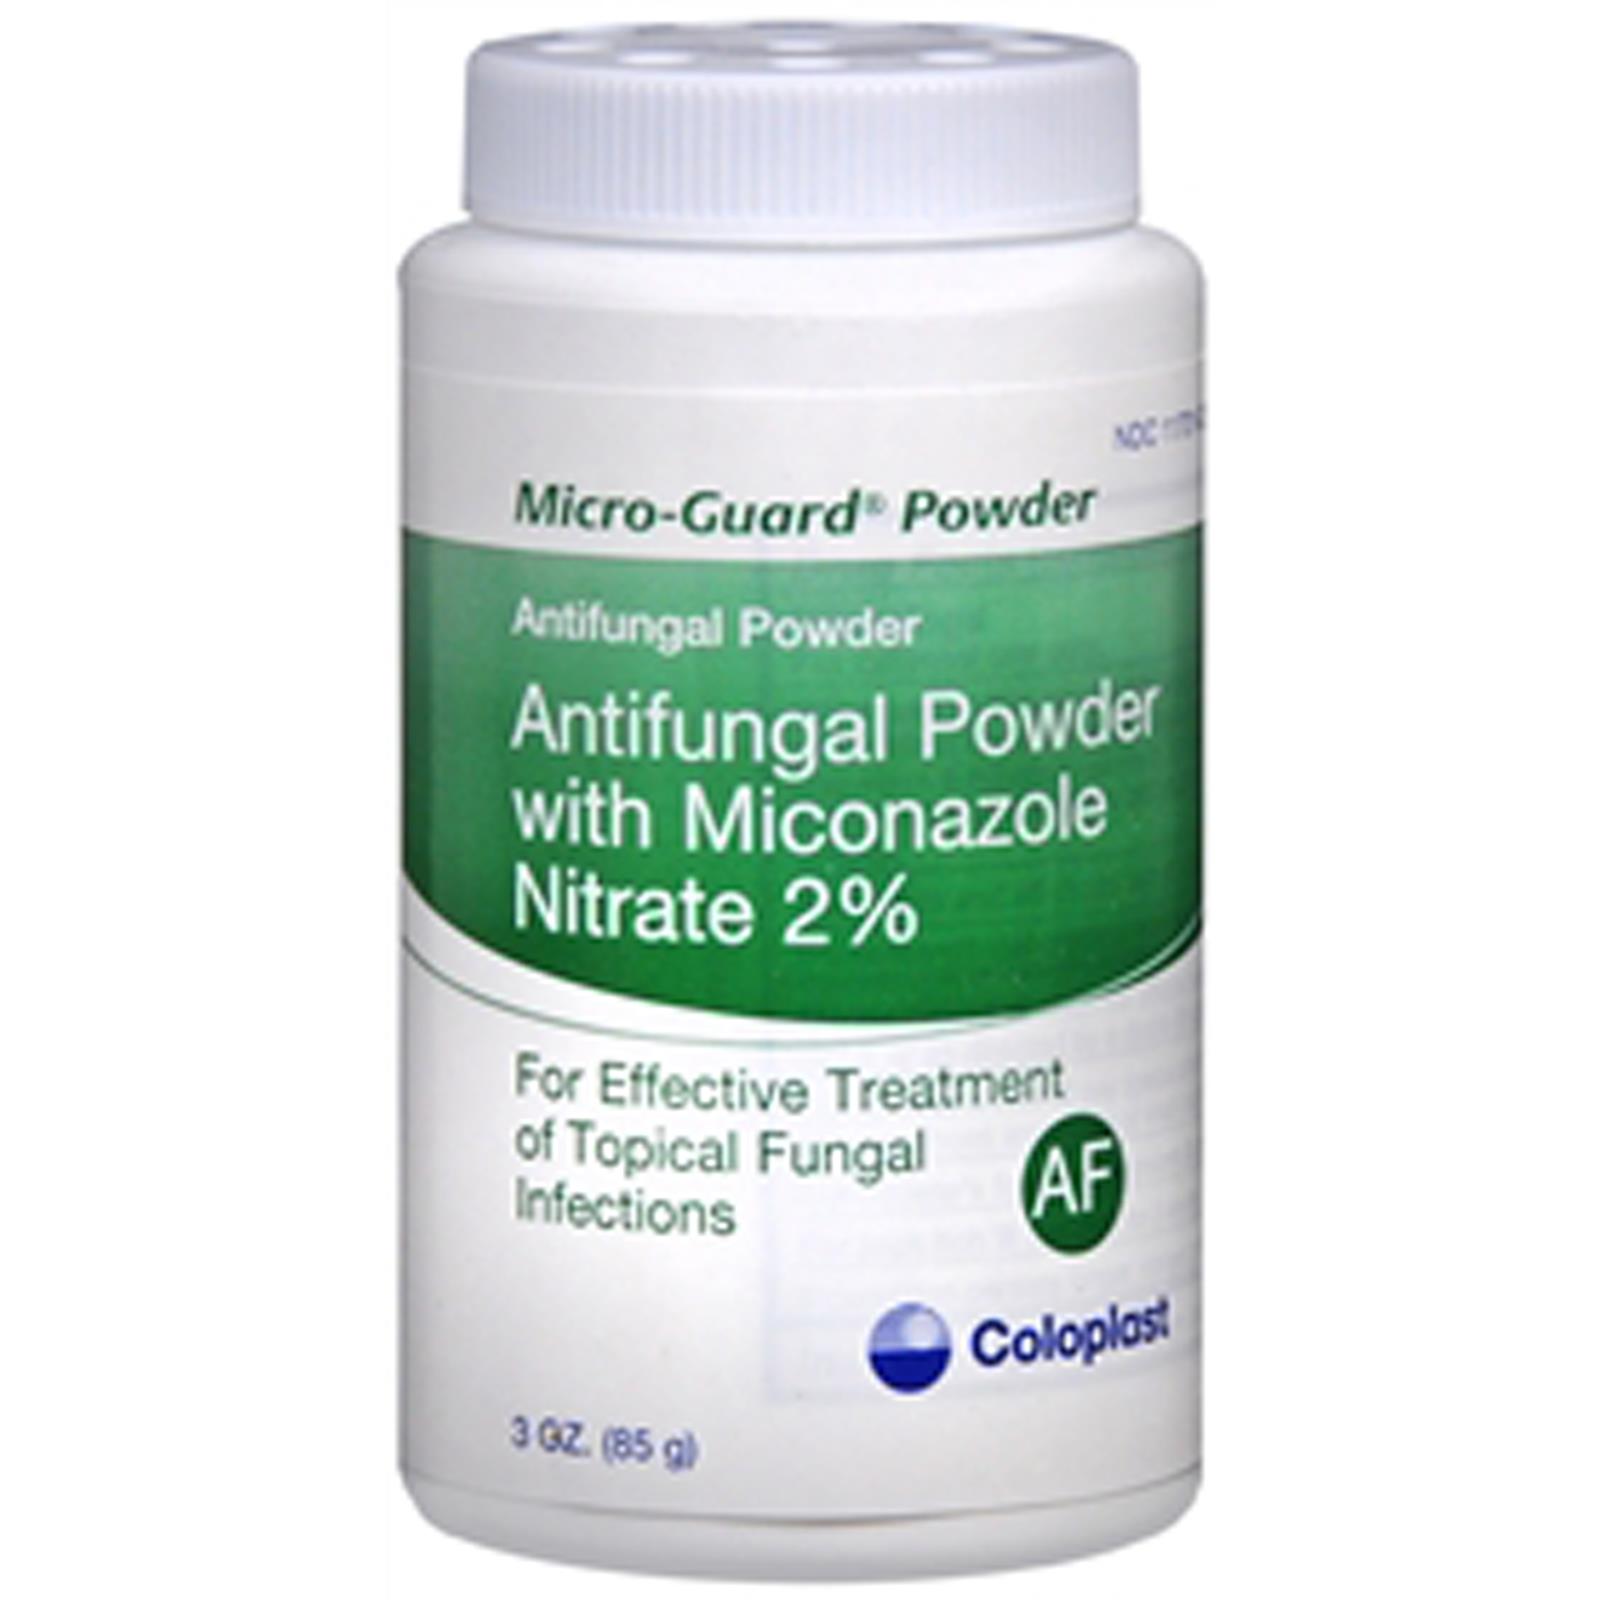 Coloplast Micro Guard Antifungal Powder with Miconazole Nitrate 2%   3 oz